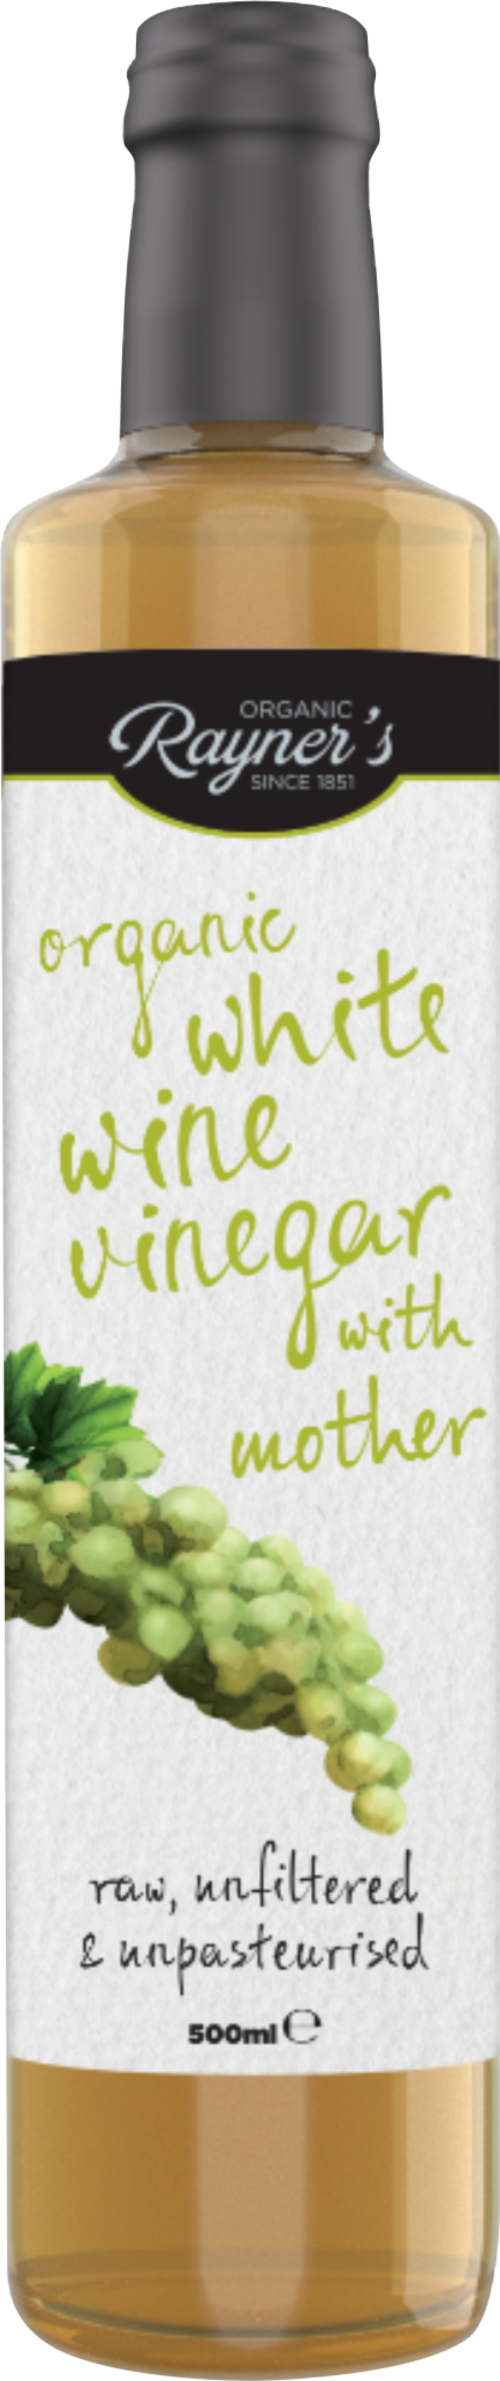 RAYNER'S Organic White Wine Vinegar with Mother 500ml